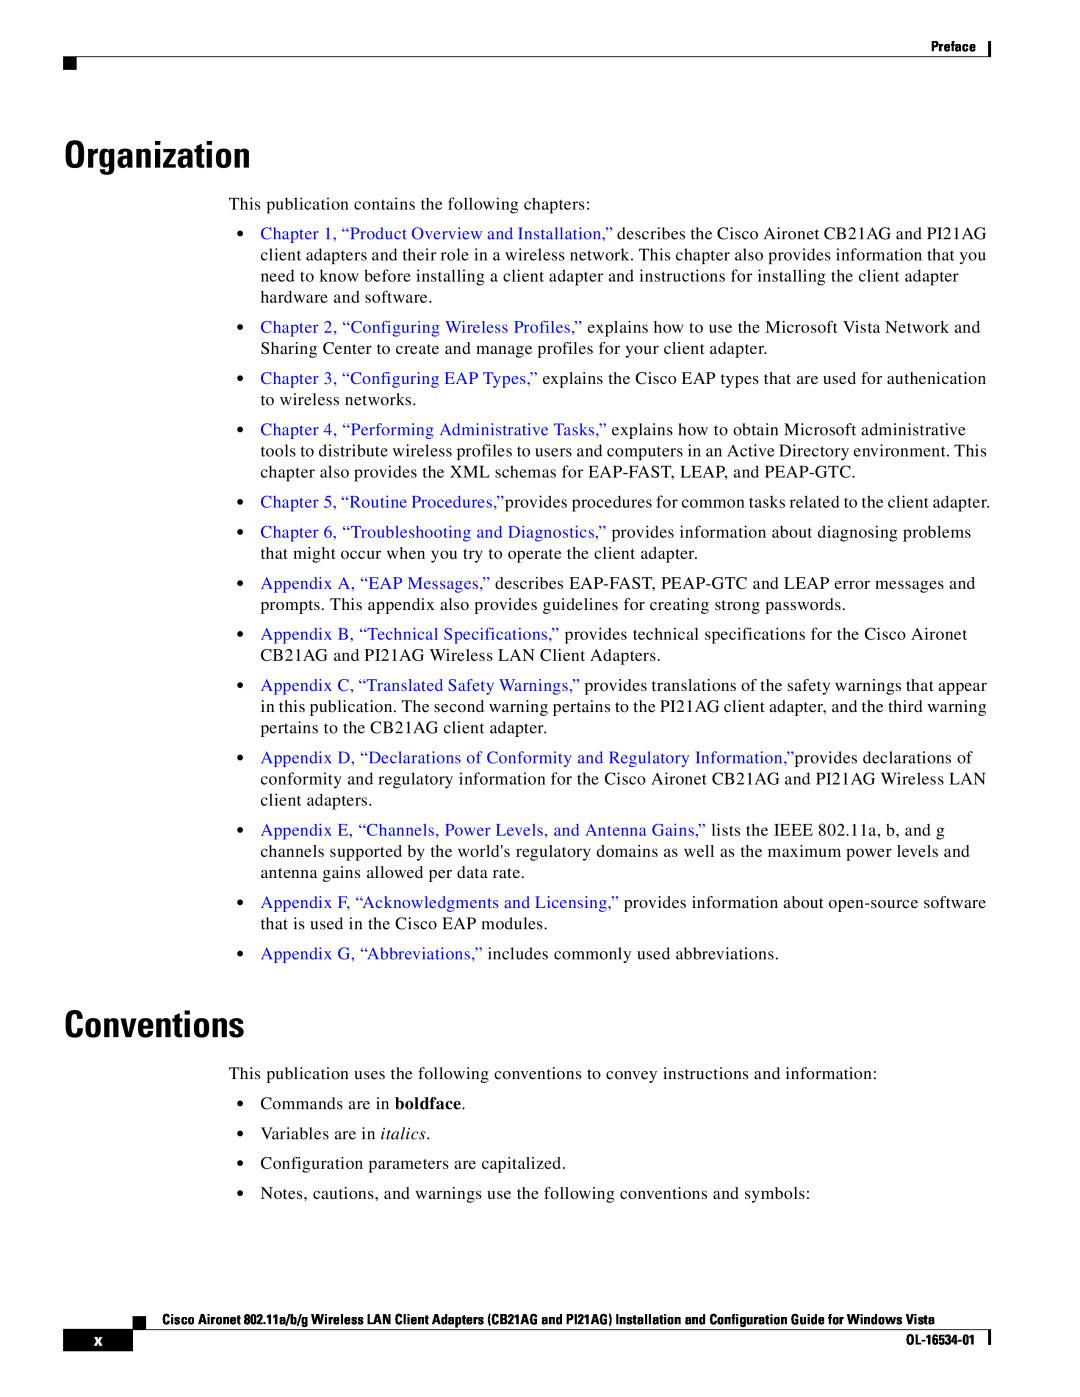 Cisco Systems PI21AG, CB21AG manual Organization, Conventions 